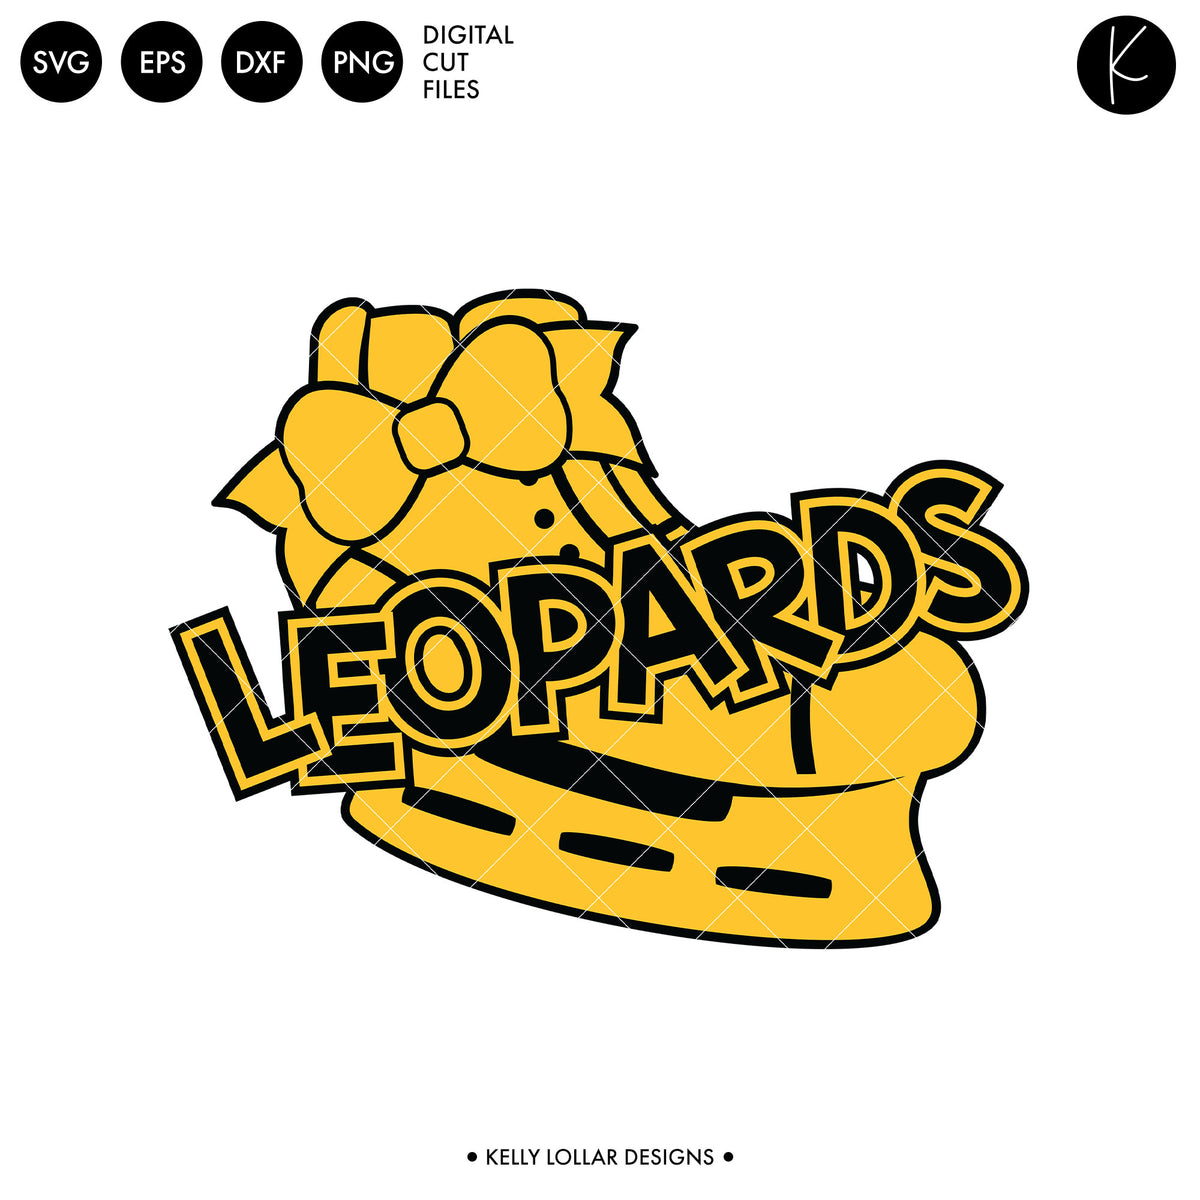 Leopards Hockey Bundle | SVG DXF EPS PNG Cut Files